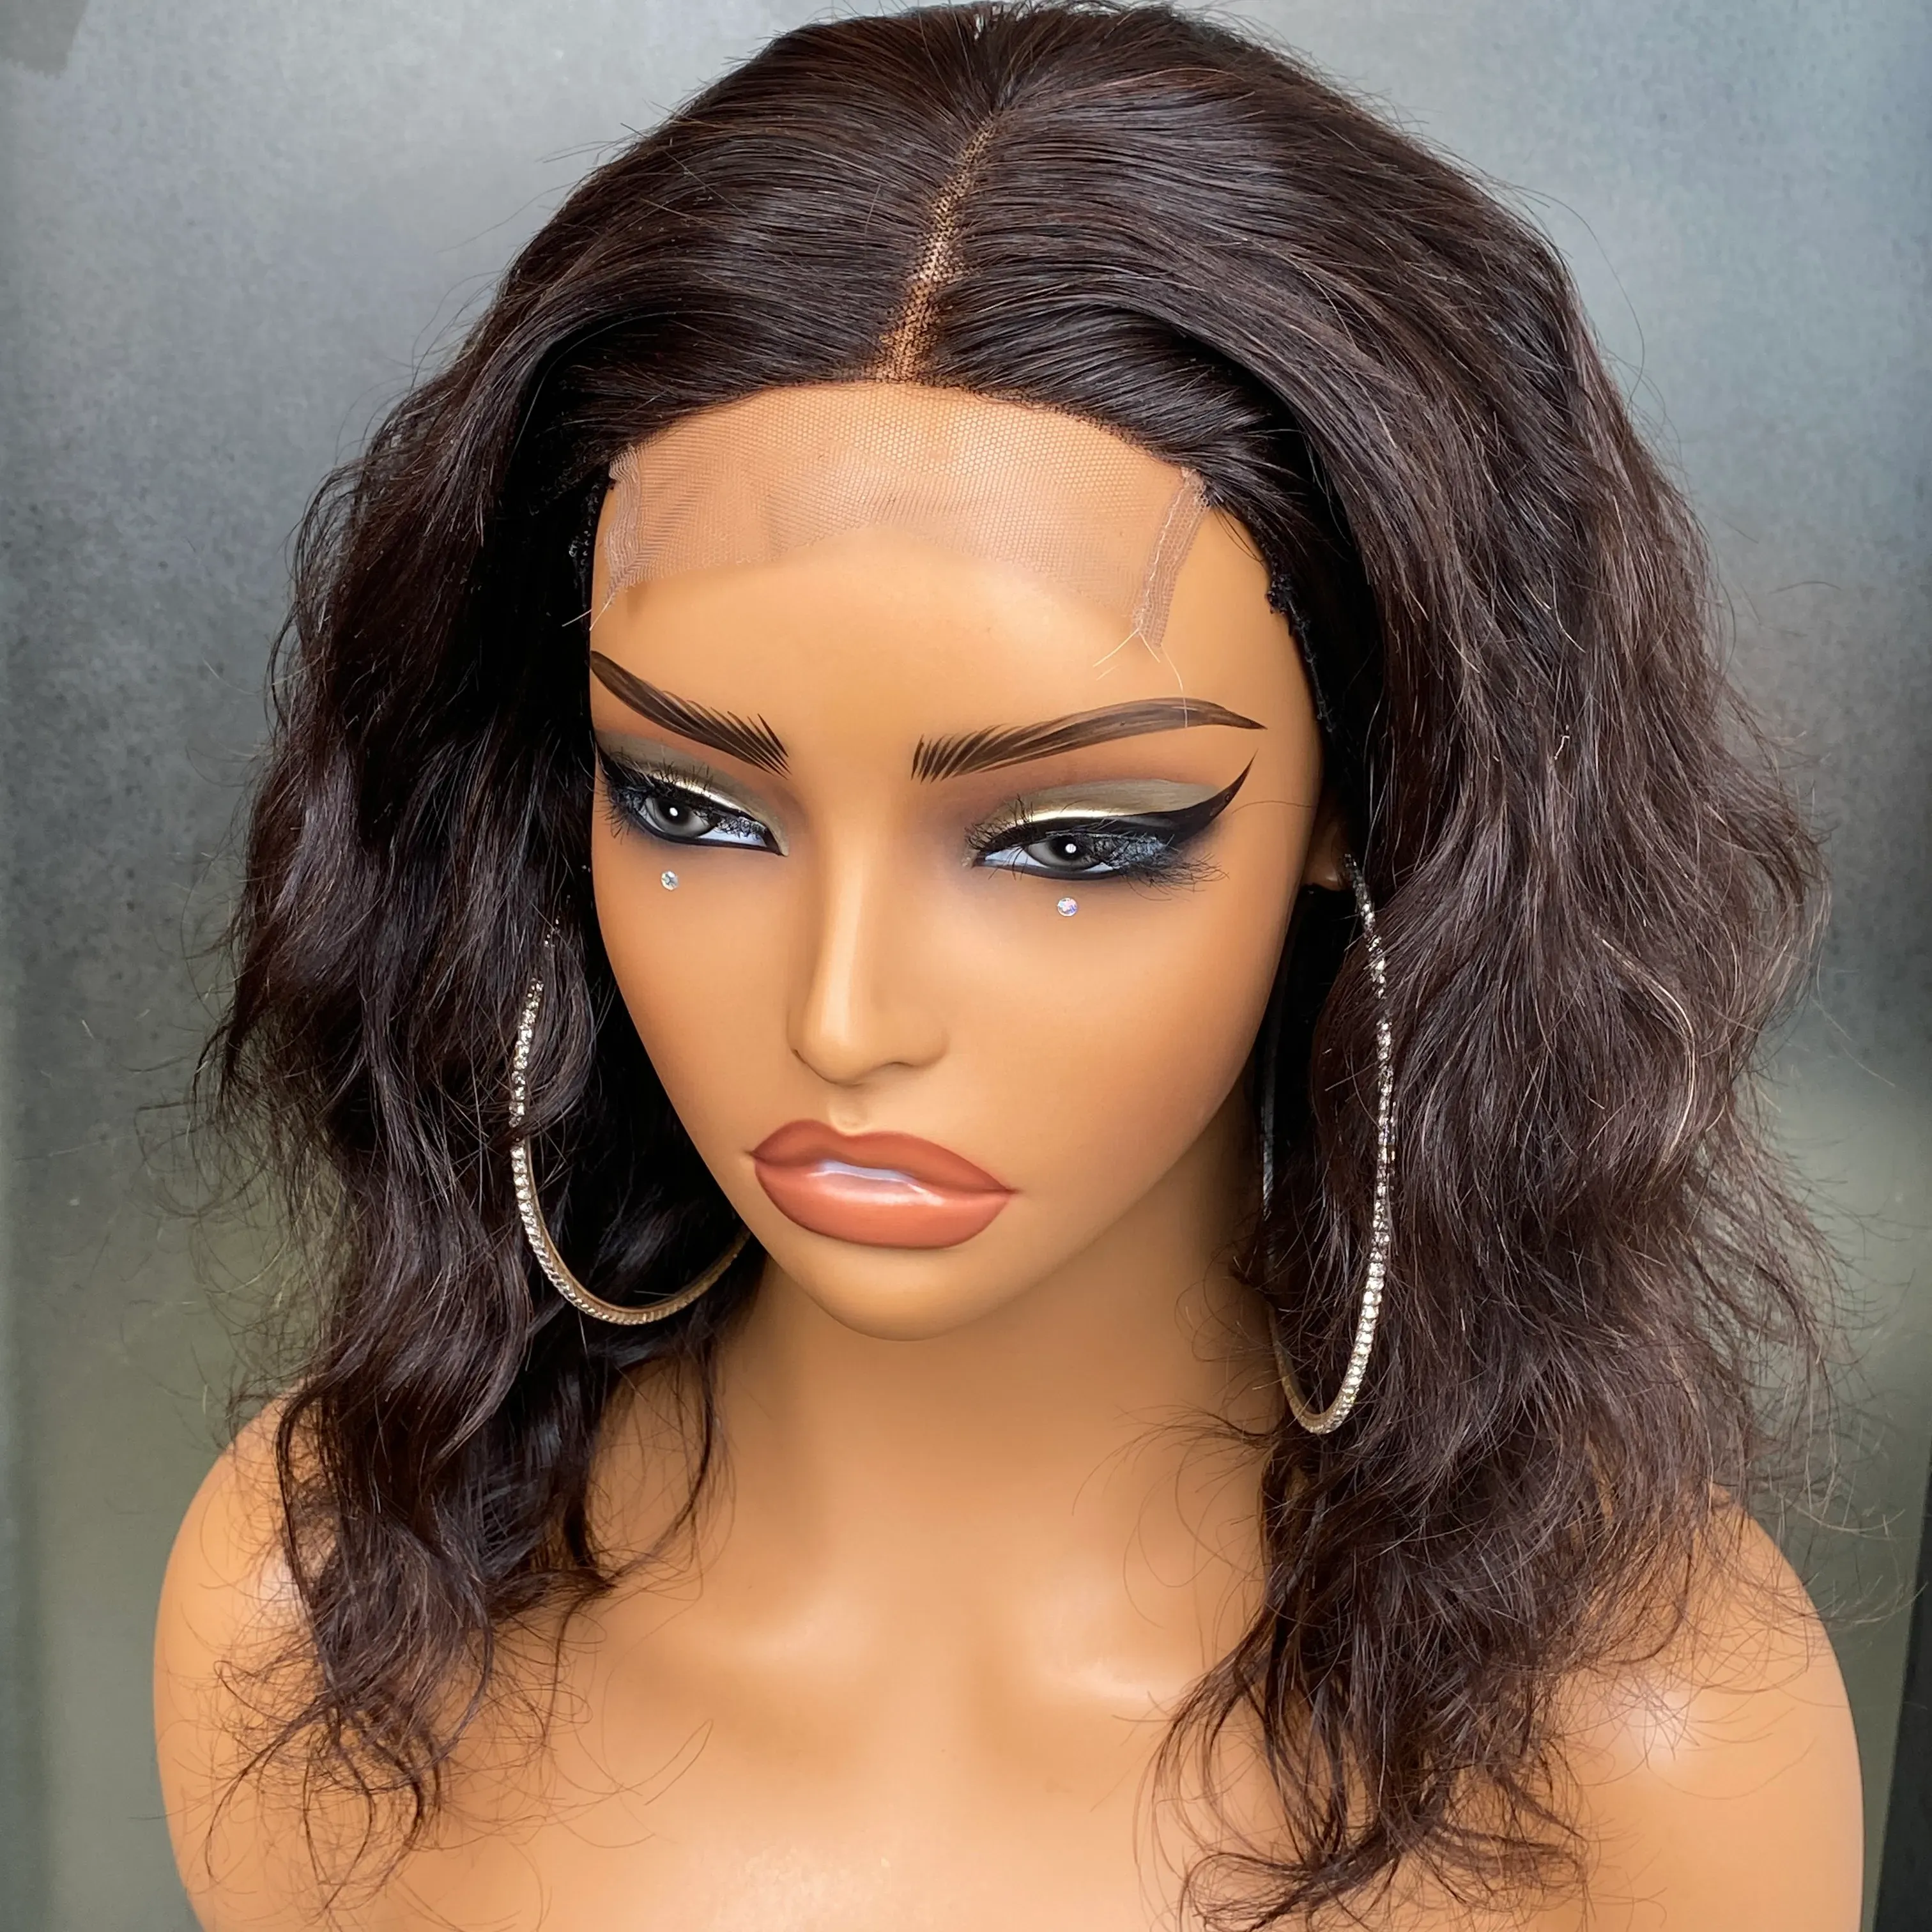 On Sale Malaysian Peruvian Brazilian Black Natural Wave 4x4 Brown Lace Closure Wig 100% Raw Virgin Remy Thick Human Hair